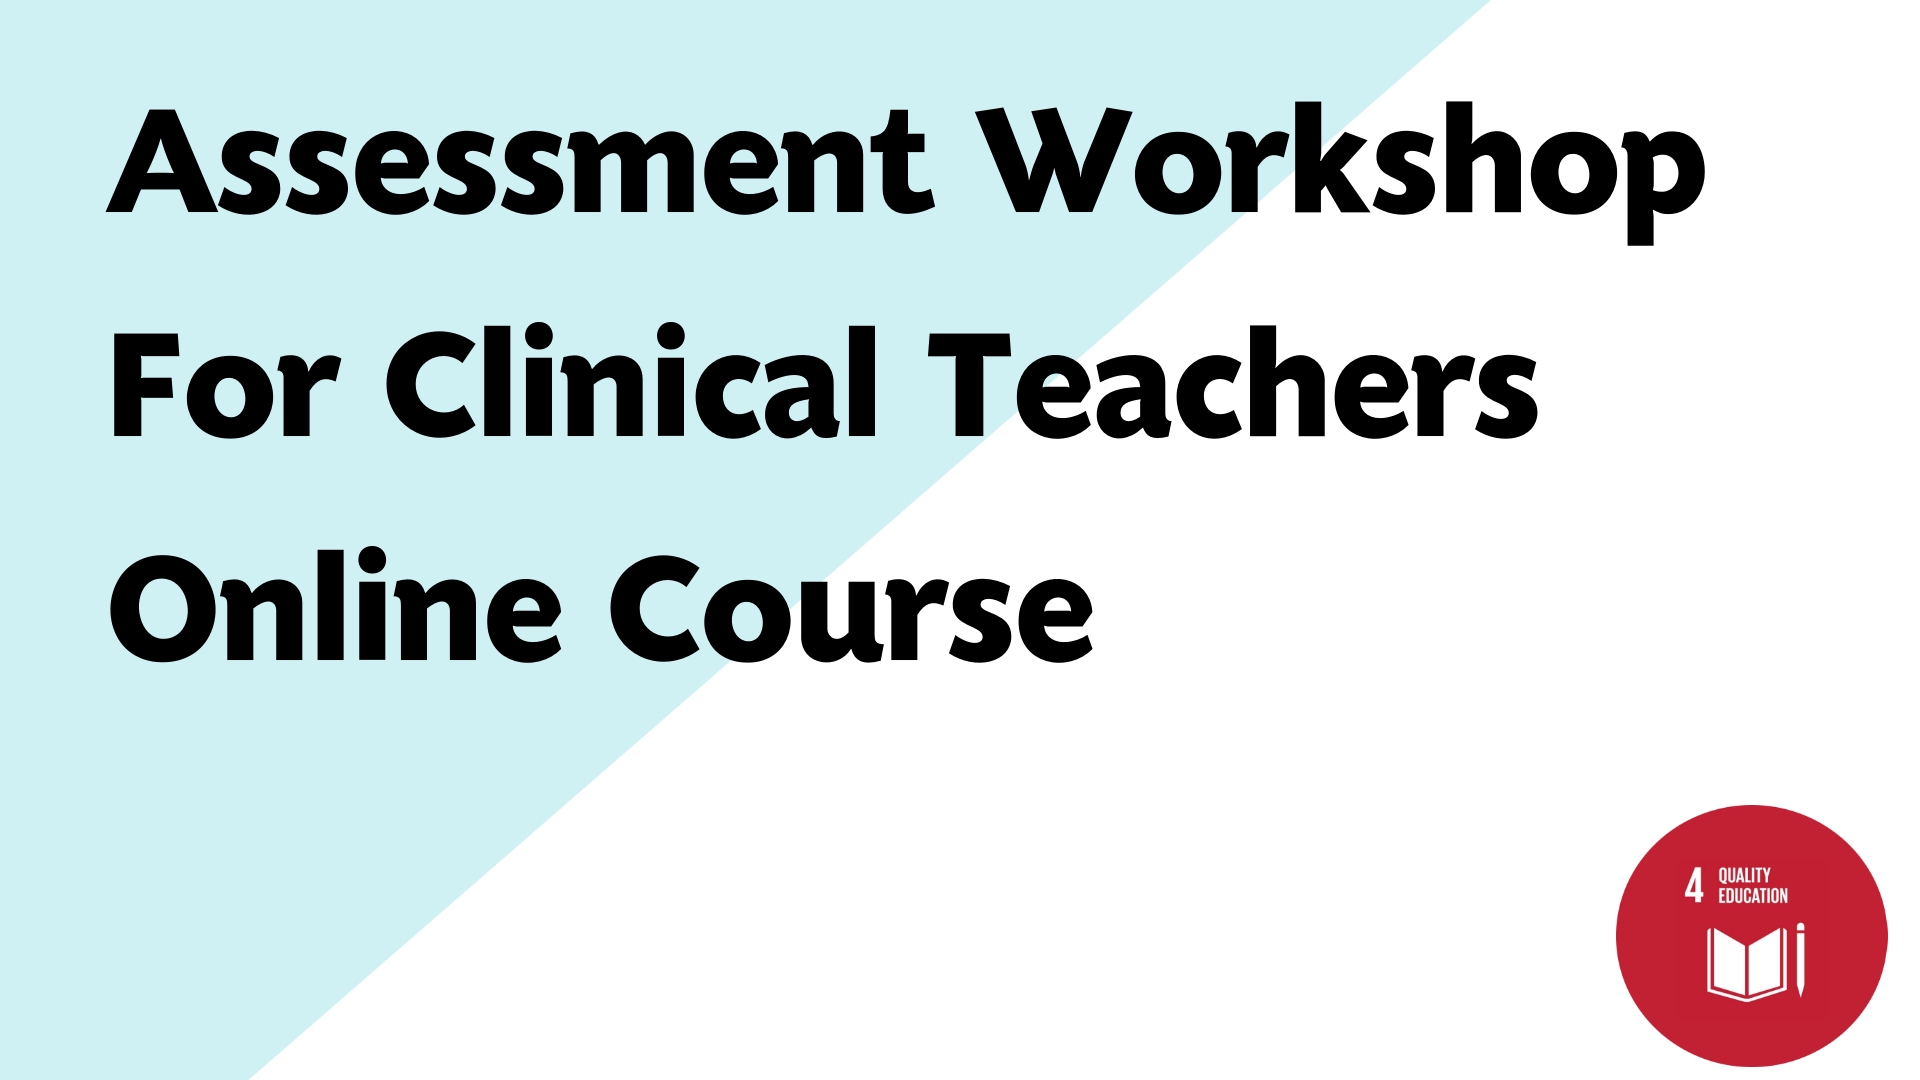 Assessment Workshop for Clinical Teachers: Online Course